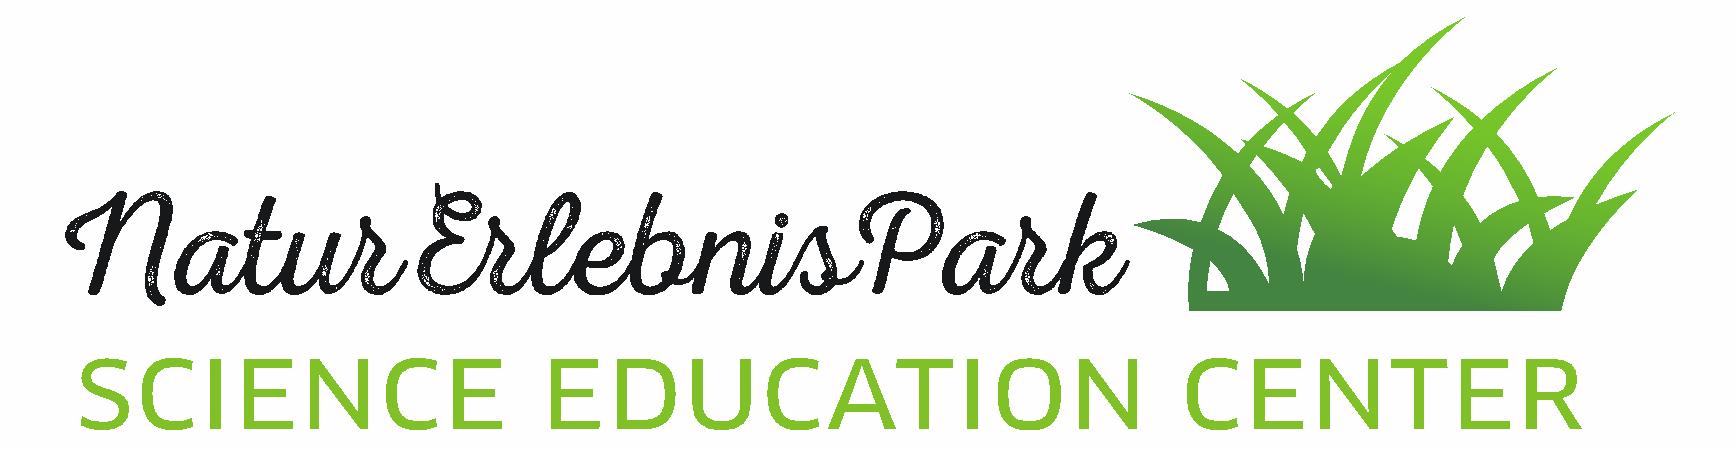 Logo NaturErlebnisPark Science Education Center